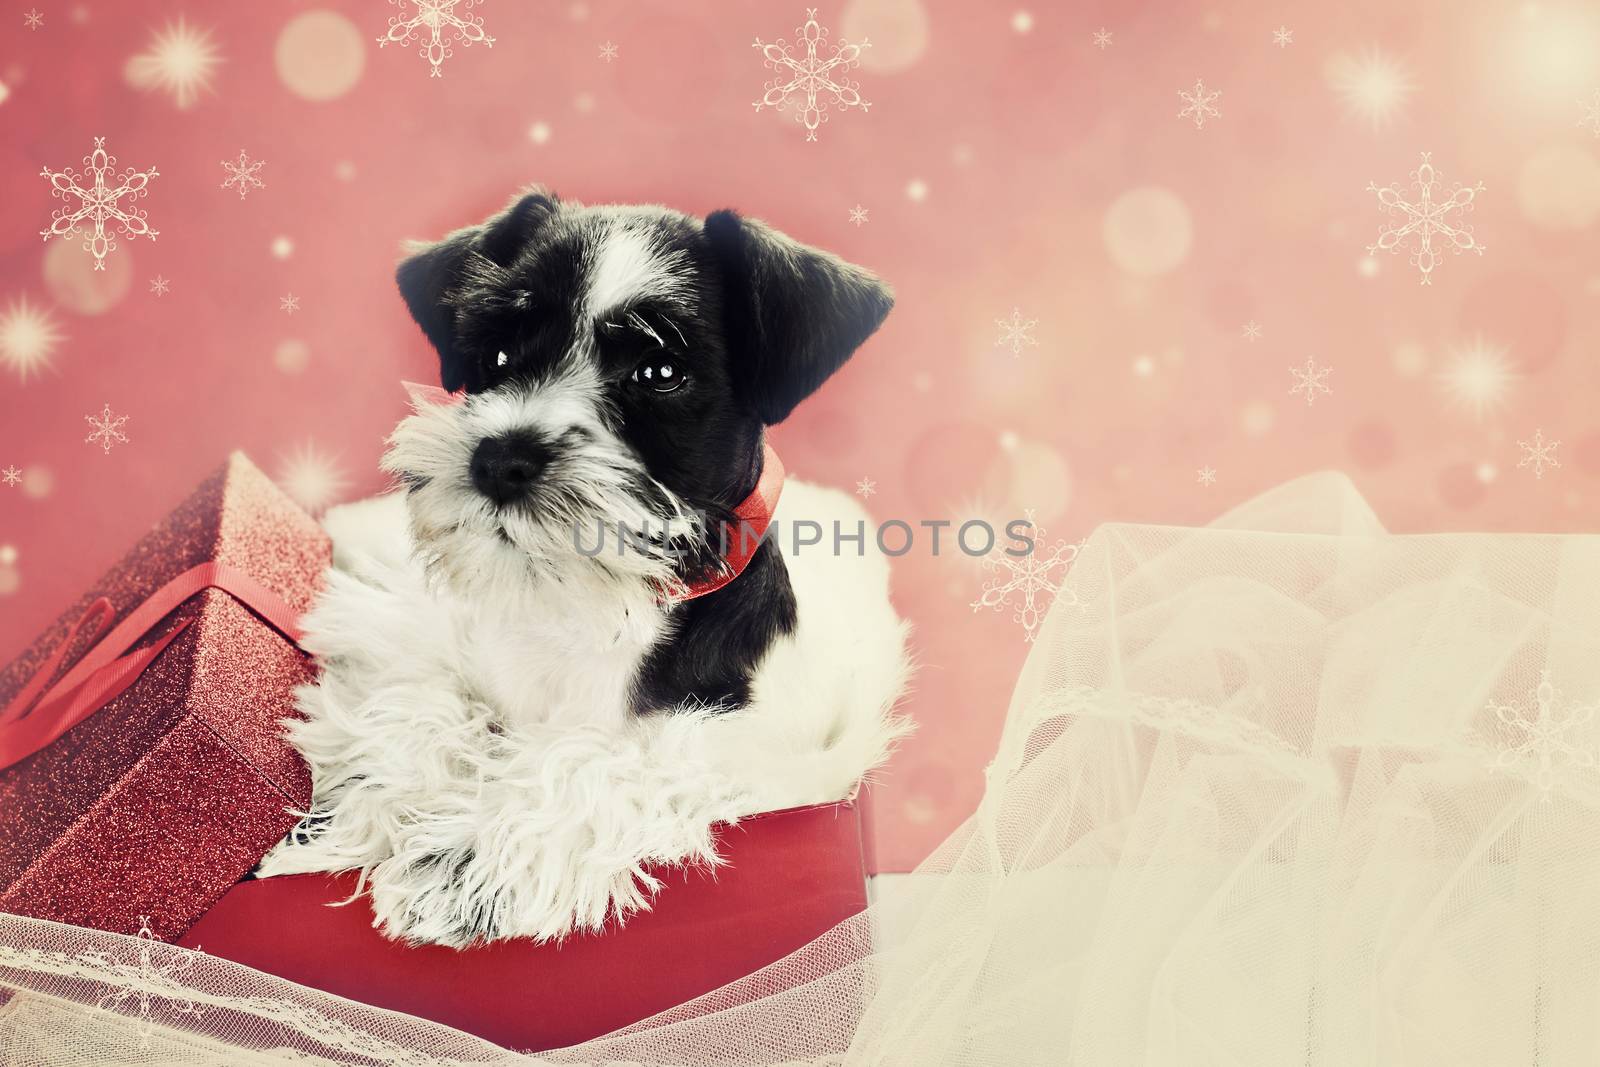 Retro Puppy in a Christmas Box by StephanieFrey